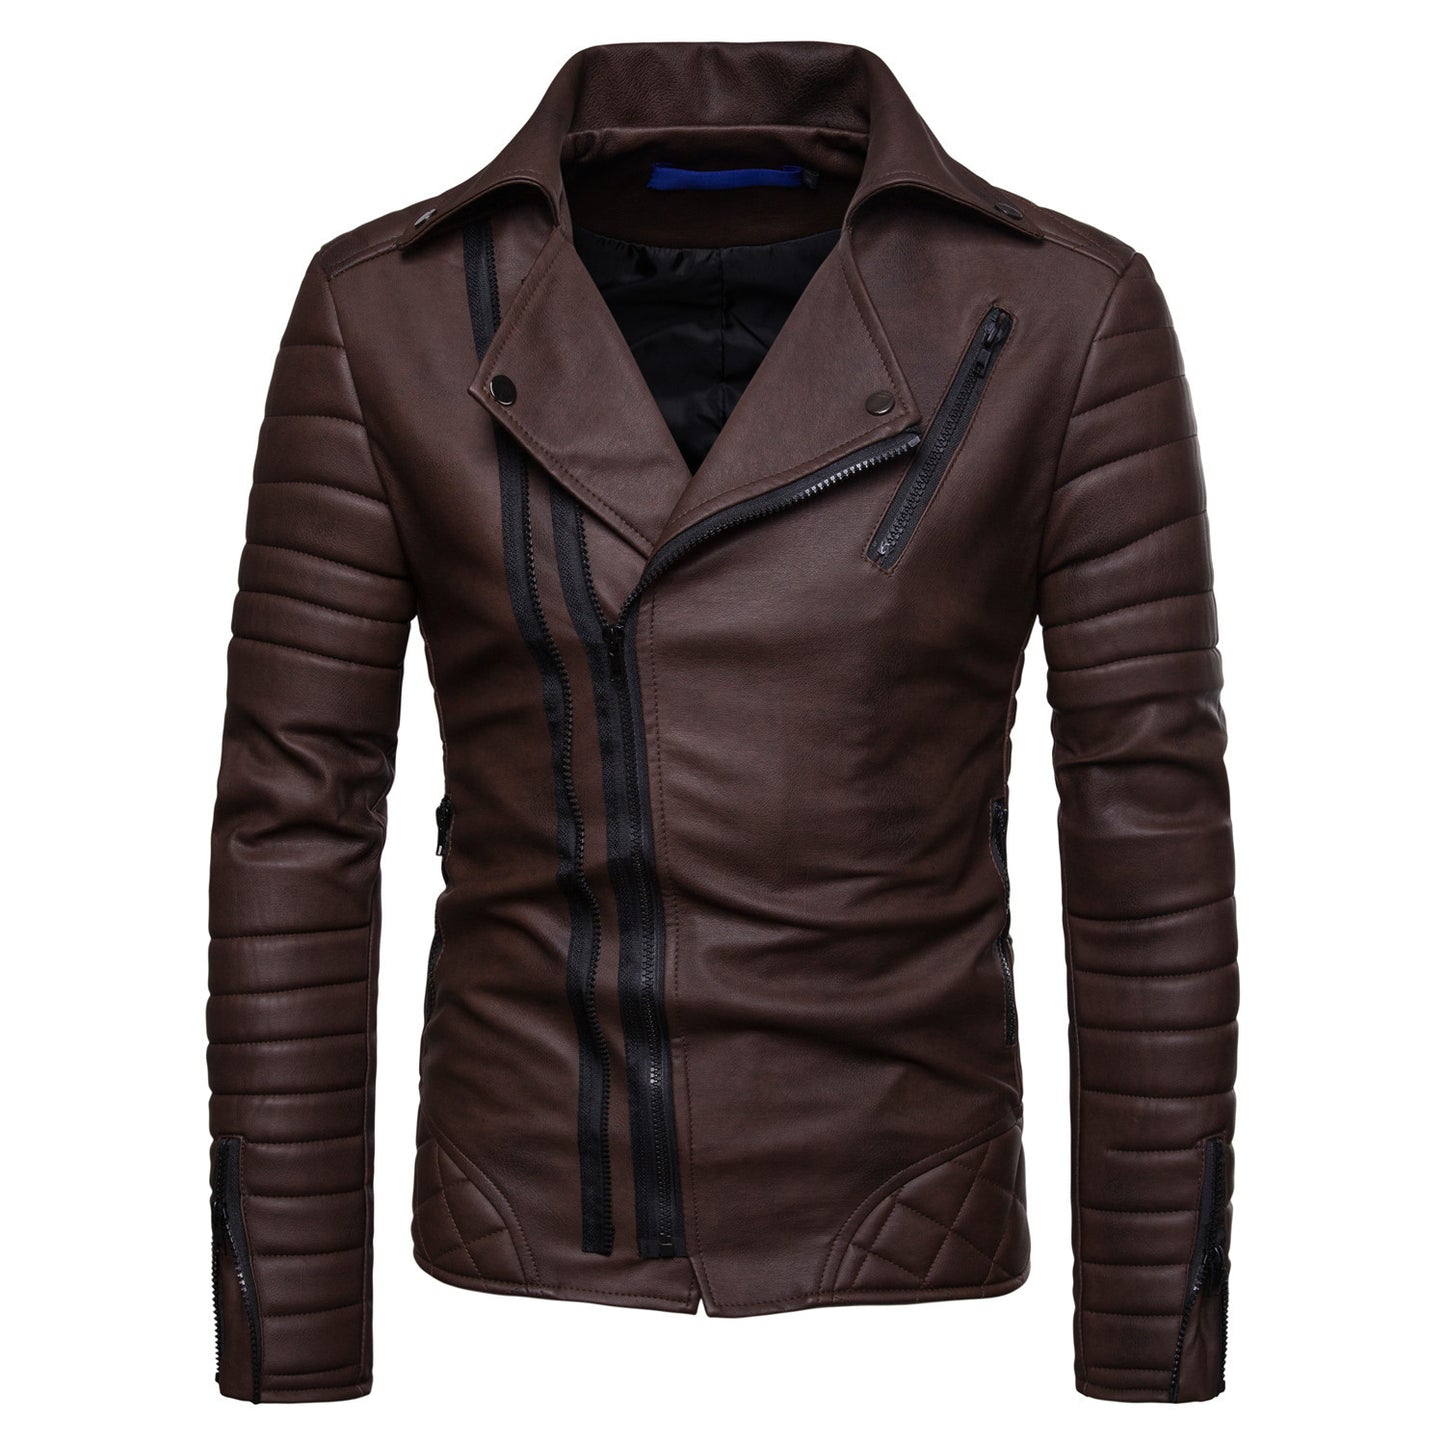 Zippered PU leather jacket